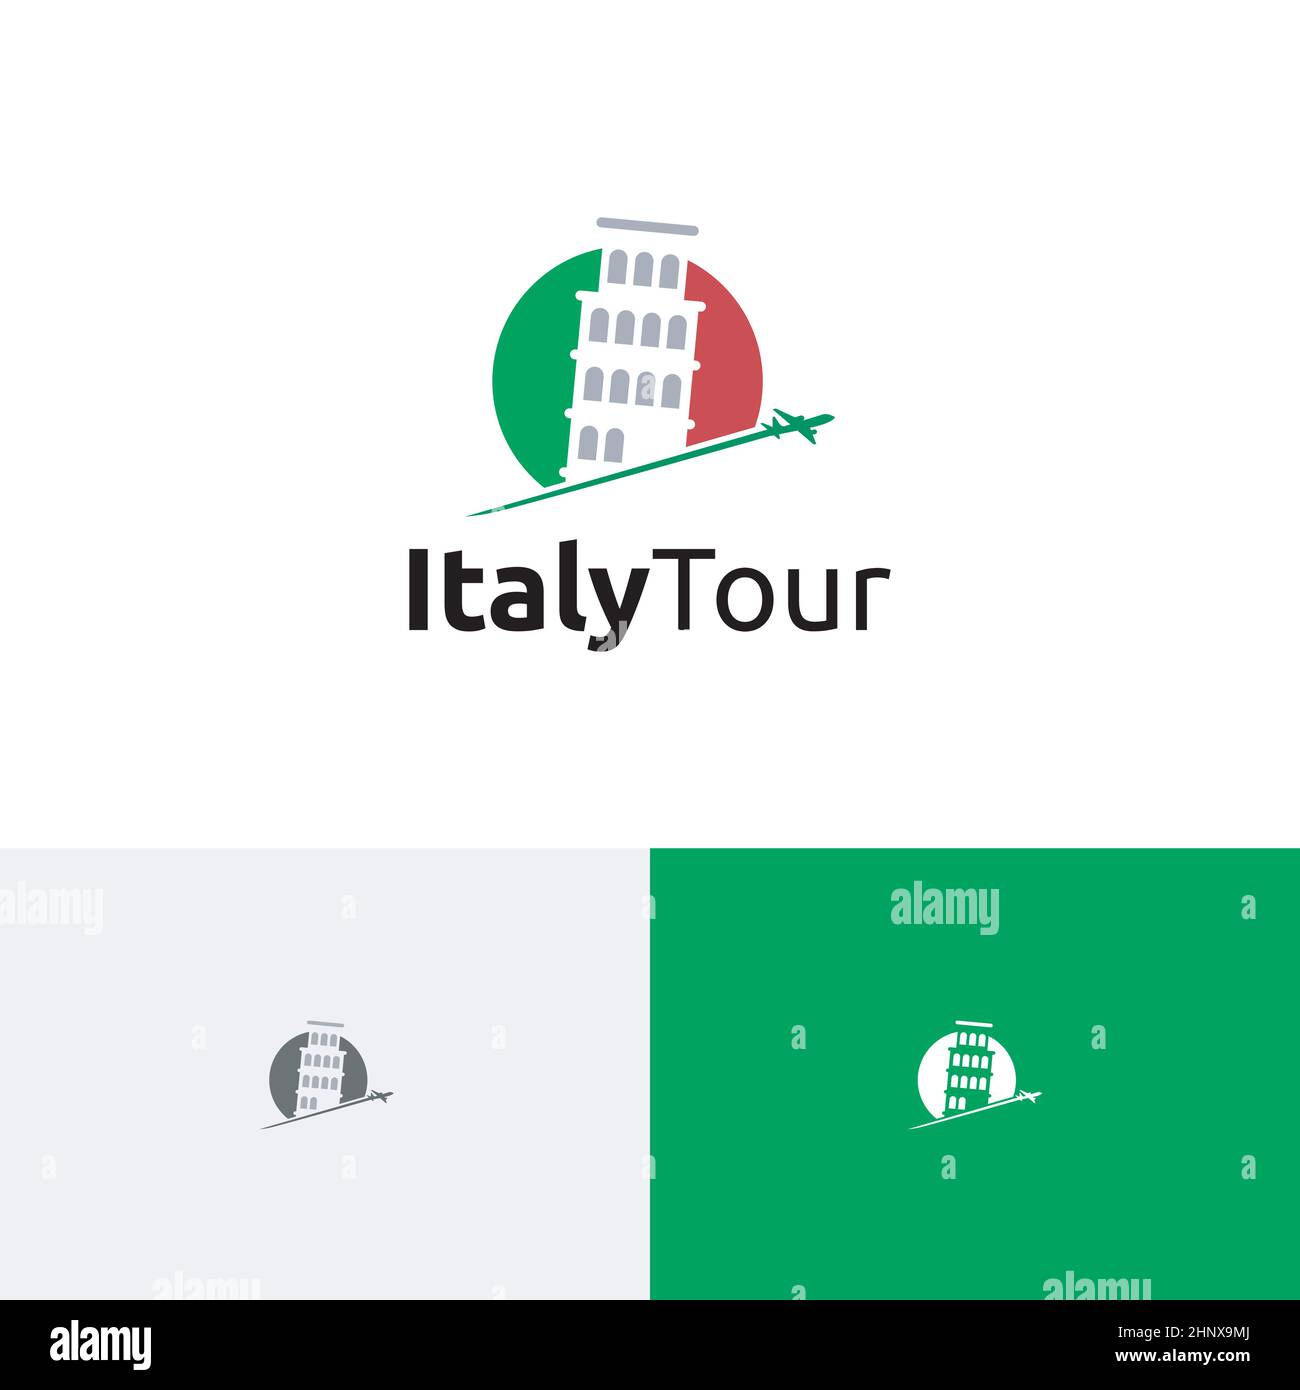 Pisa Schiefer Turm Italien Tour Reise Urlaub Agentur Logo Stock Vektor